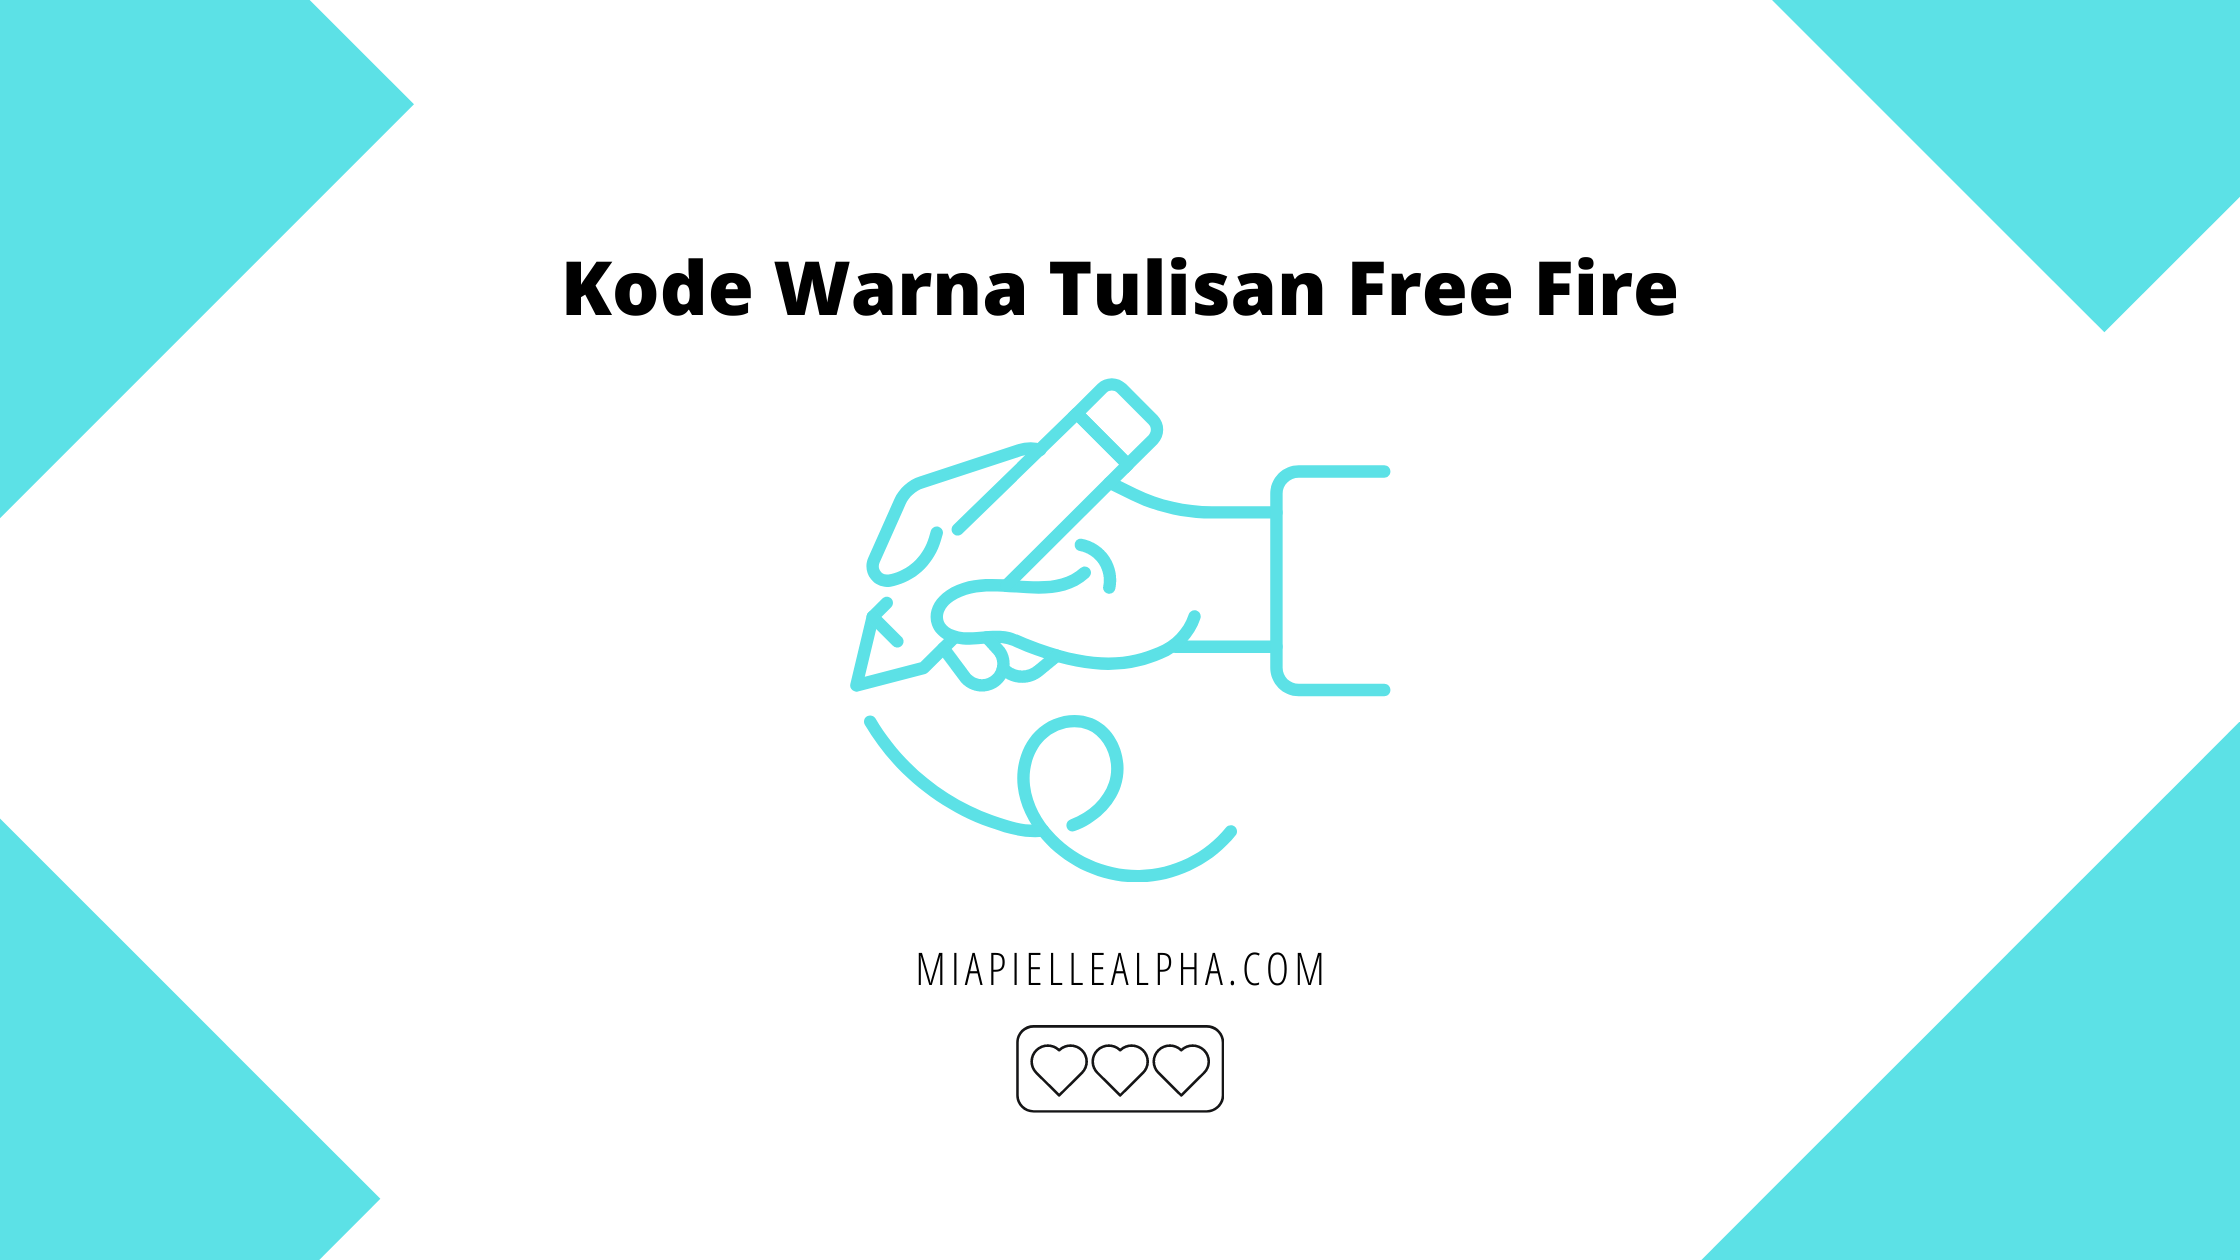 Kode Warna Tulisan Free Fire